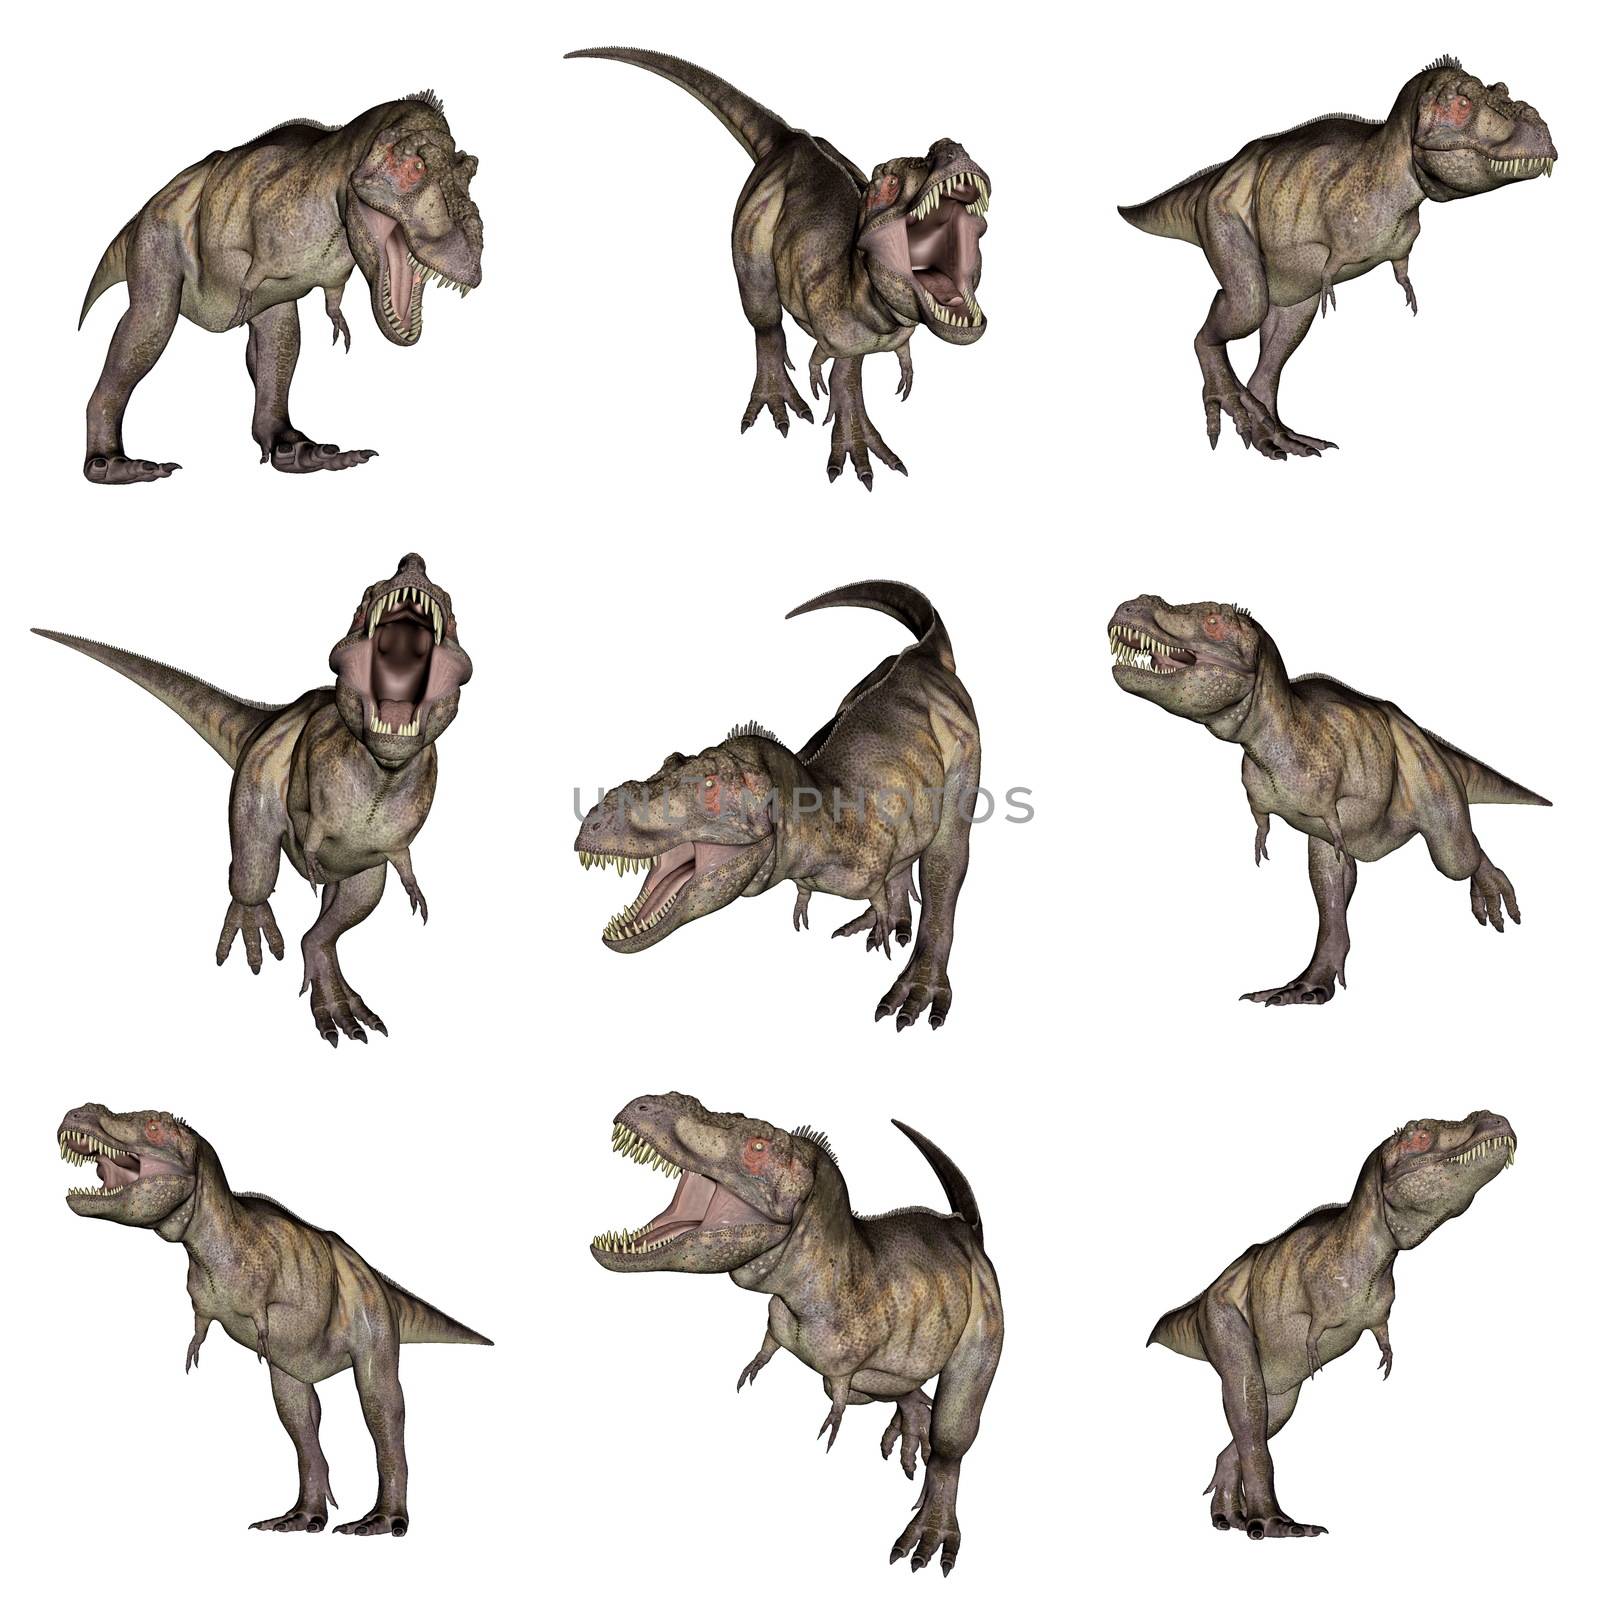 Tyrannosaurus rex dinosaurs - 3D render by Elenaphotos21